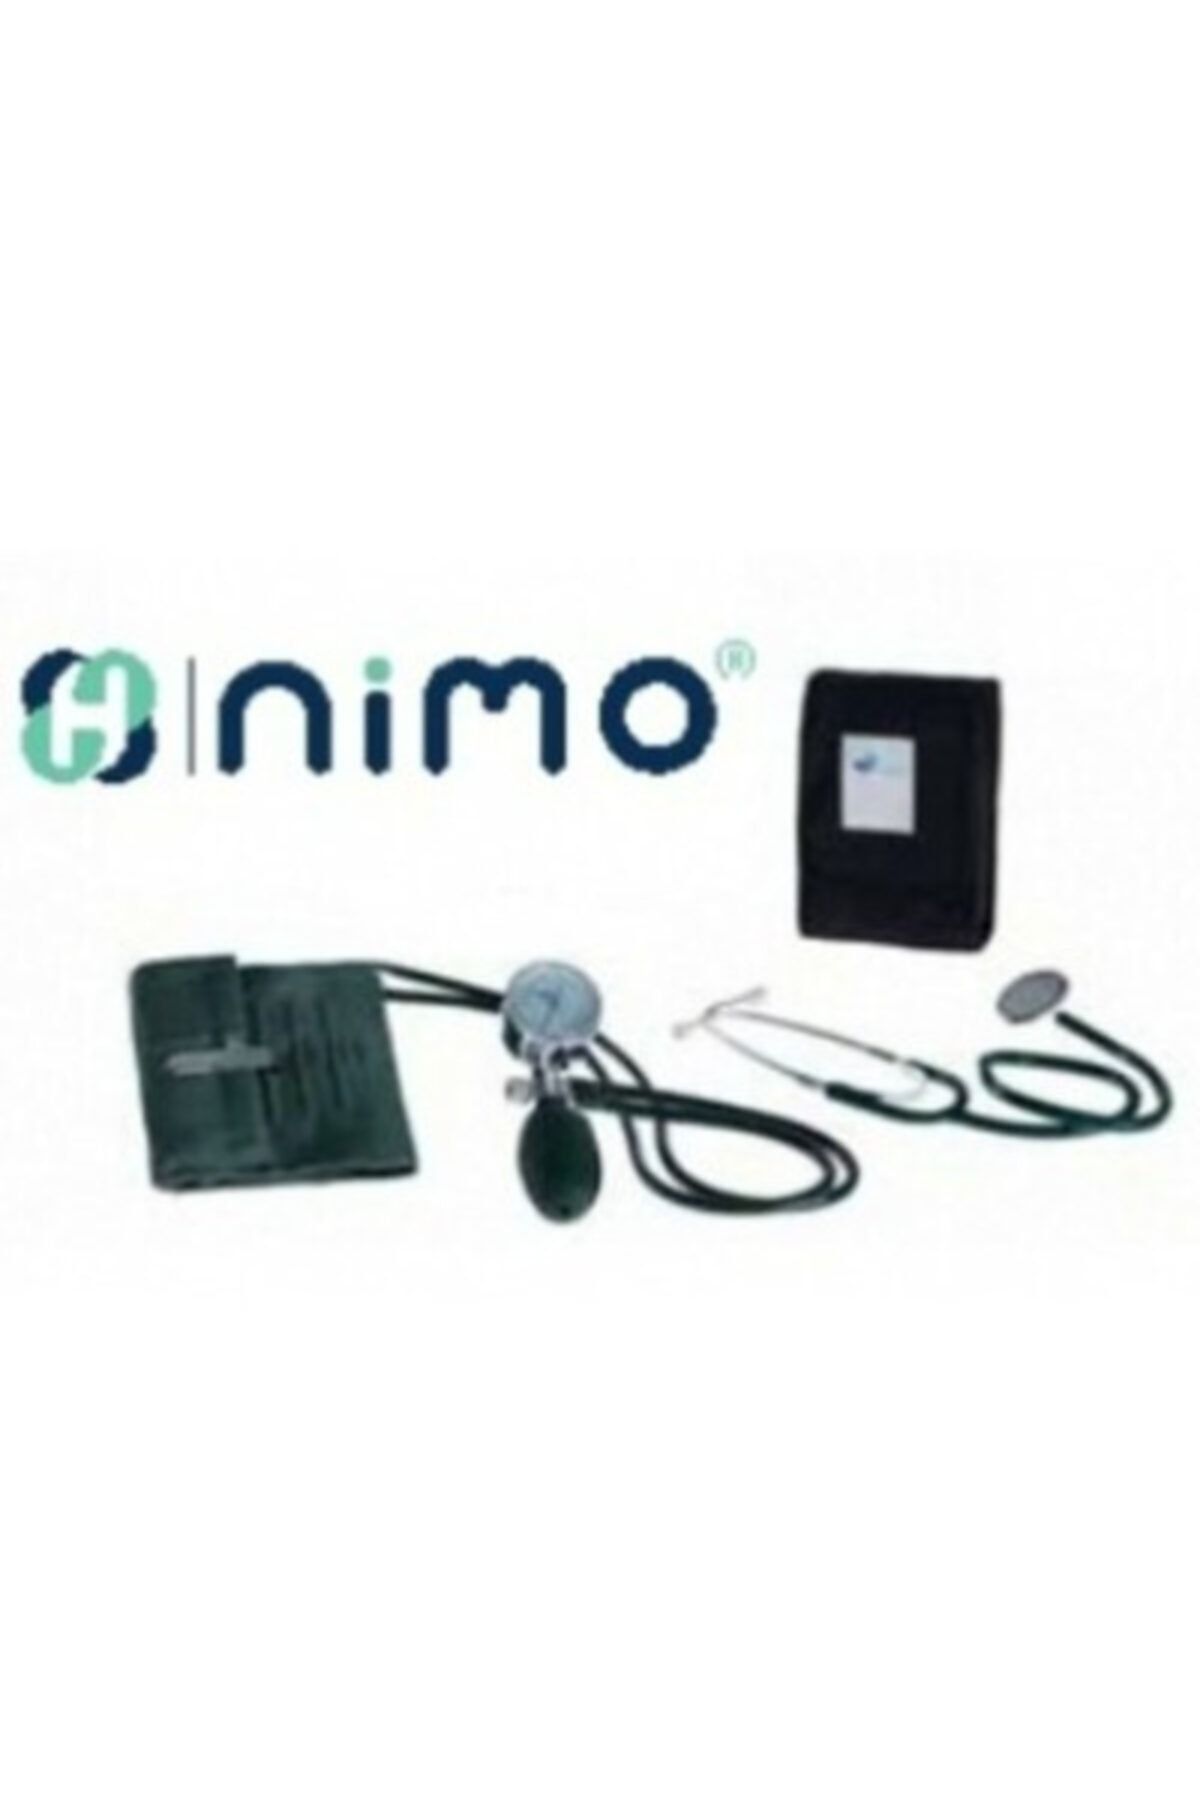 Nimomed Nimo Hnk-2t Yeşil Kancalı Aneroid Tansiyon Aleti